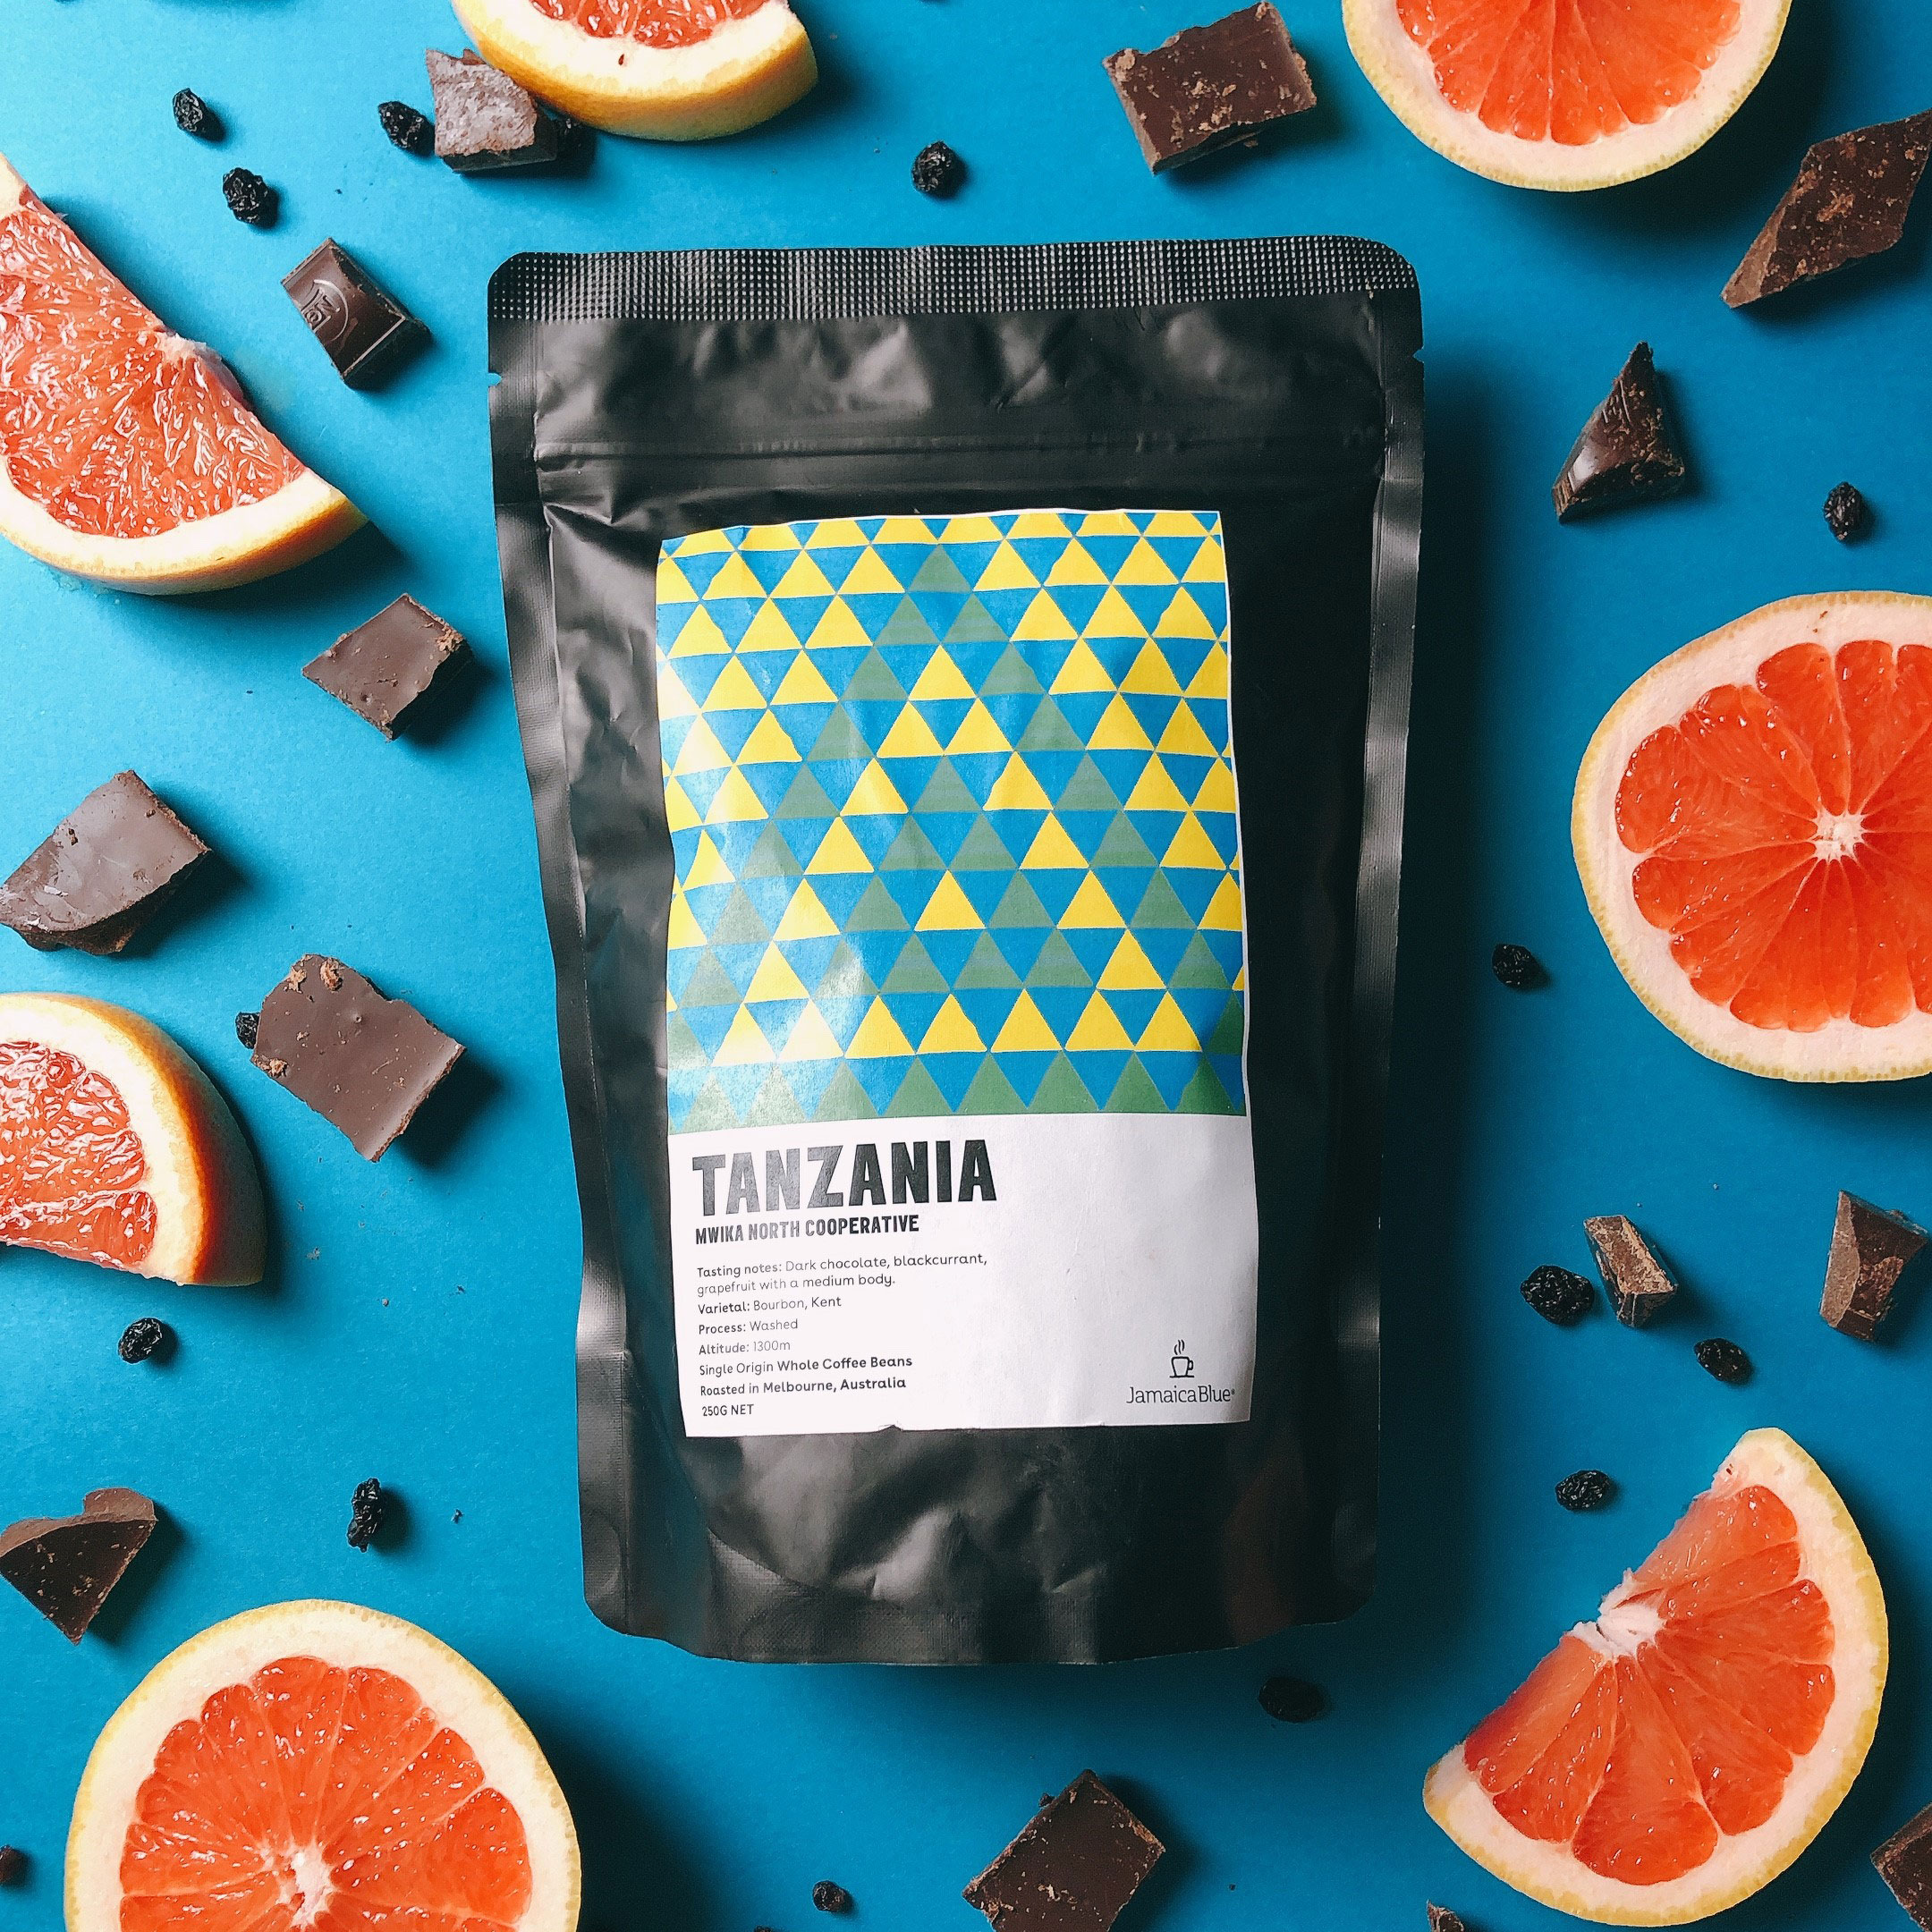 Jamaica Blue Single Origin Tanzania Coffee